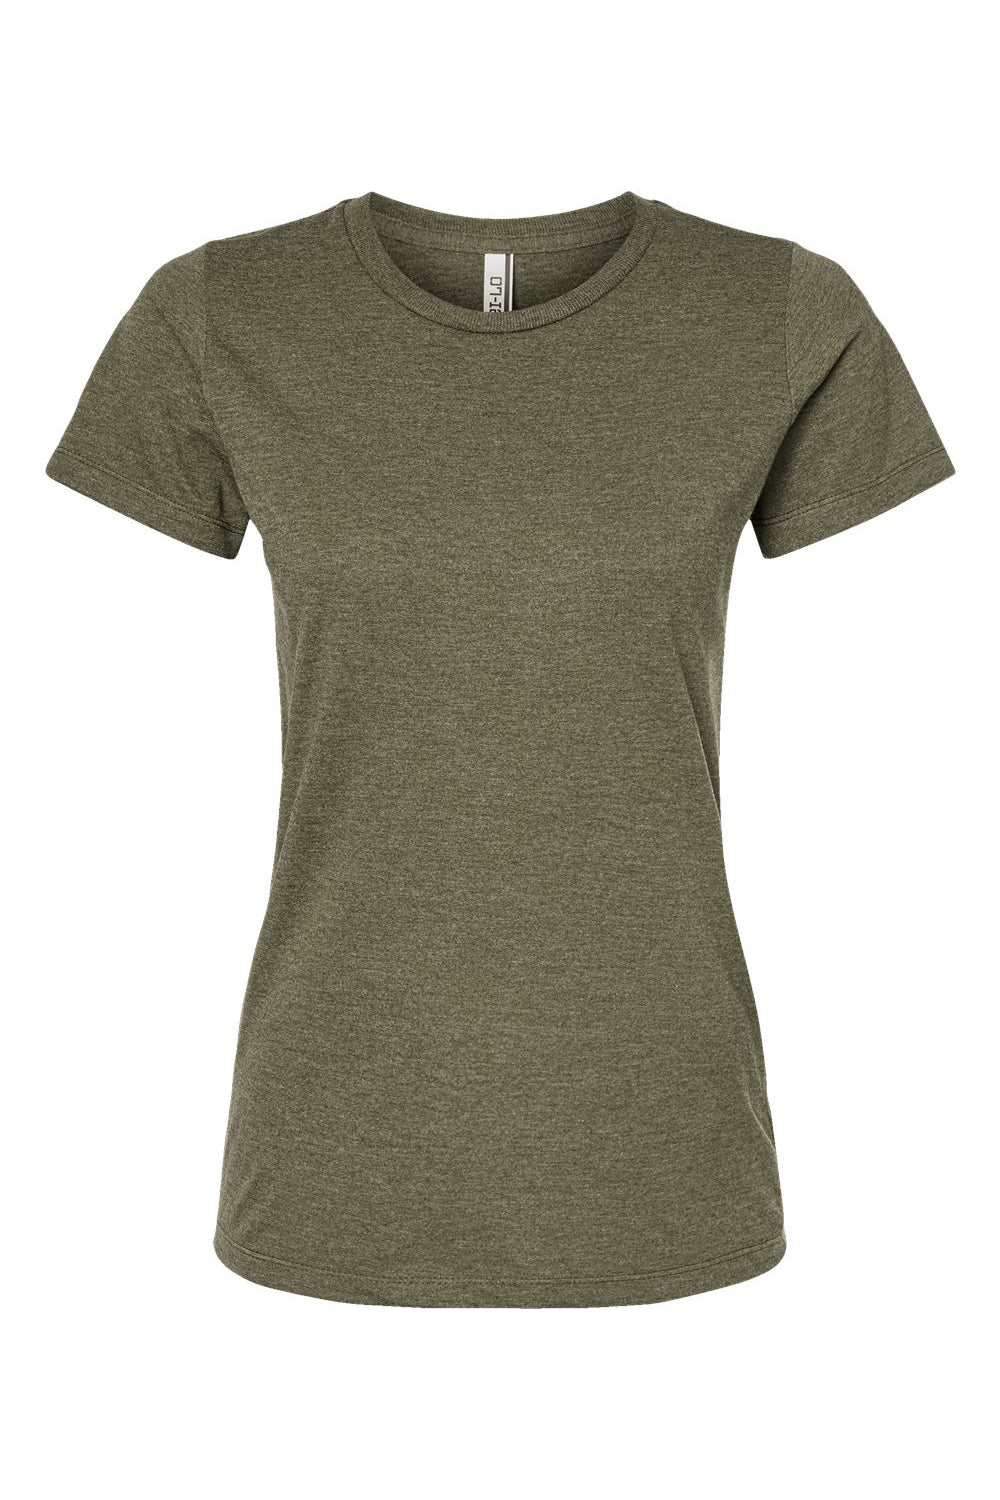 Tultex 542 Womens Premium Short Sleeve Crewneck T-Shirt Heather Olive Green Flat Front